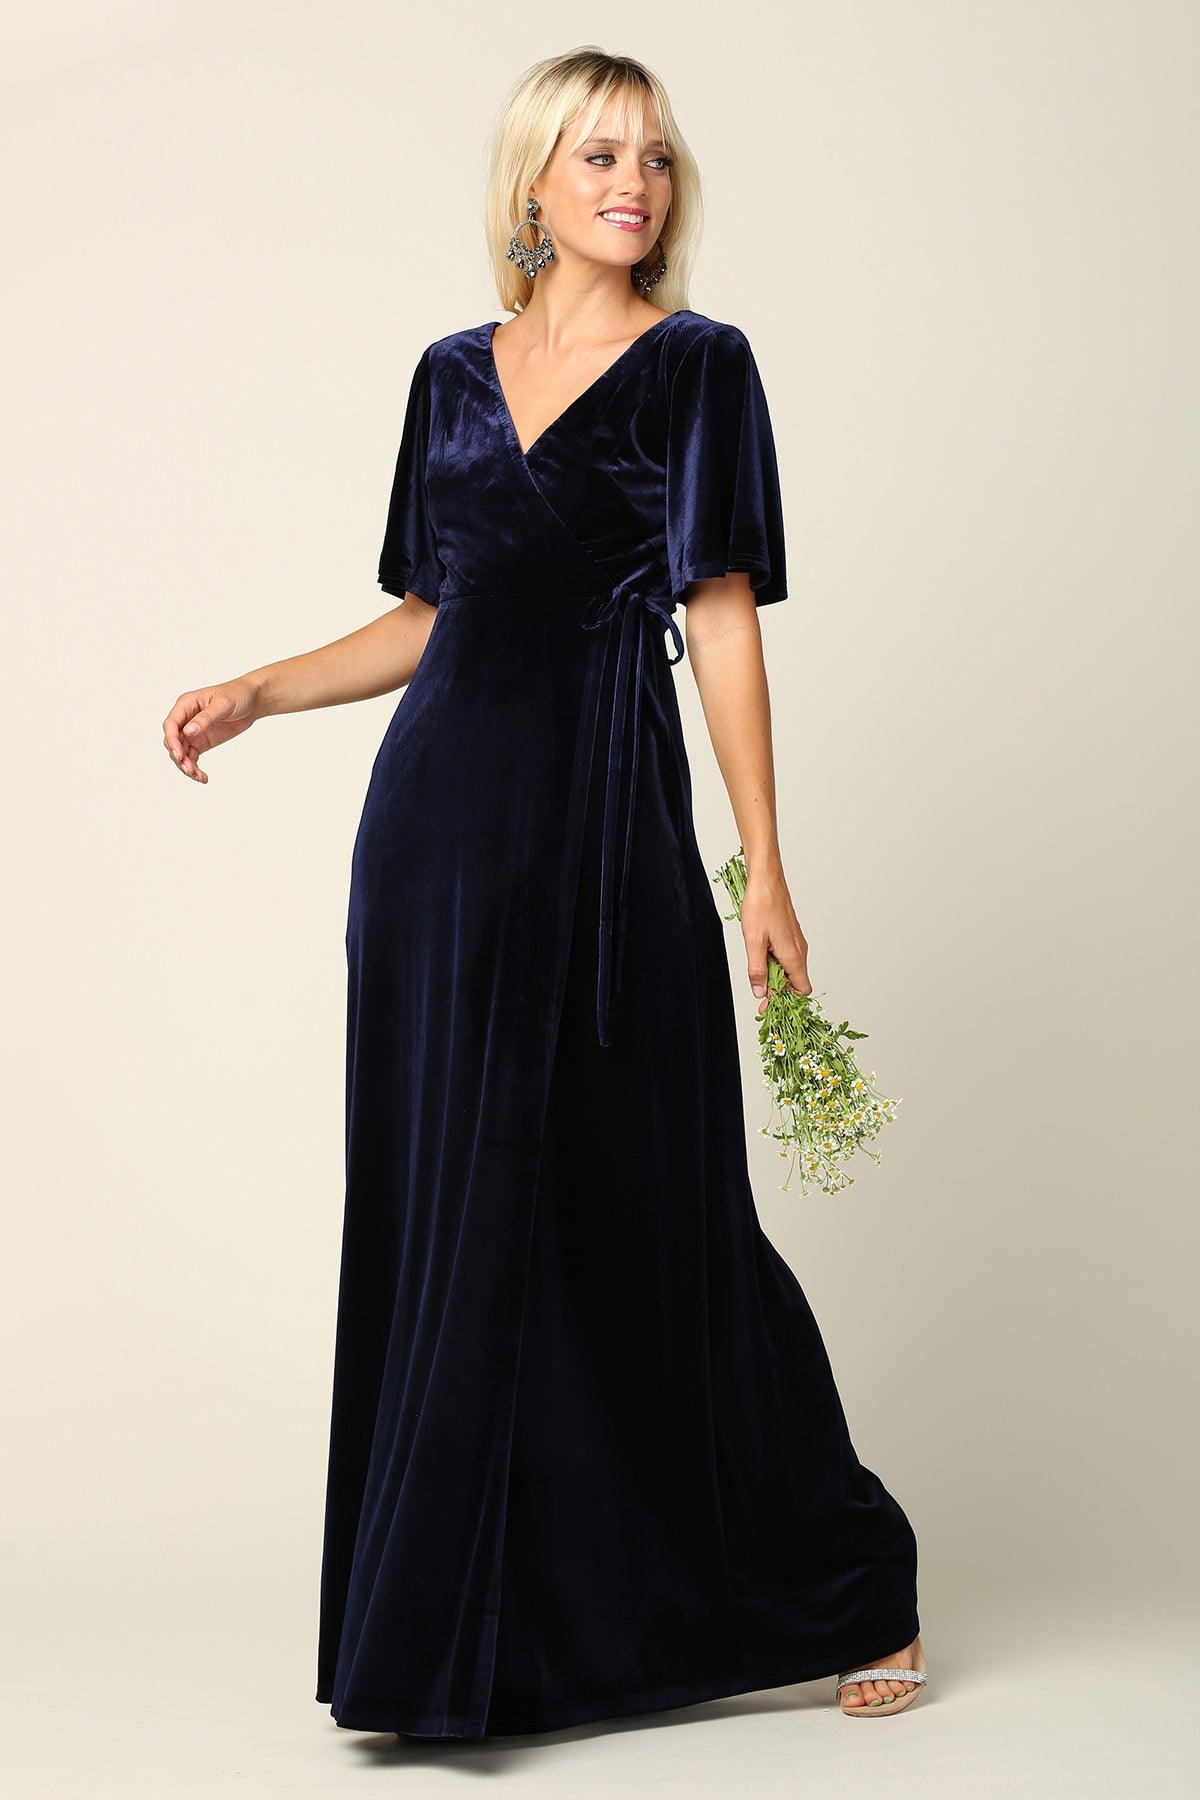 V-Neck Dark Green Velvet Long Prom Dress with Rhinestones – FancyVestido